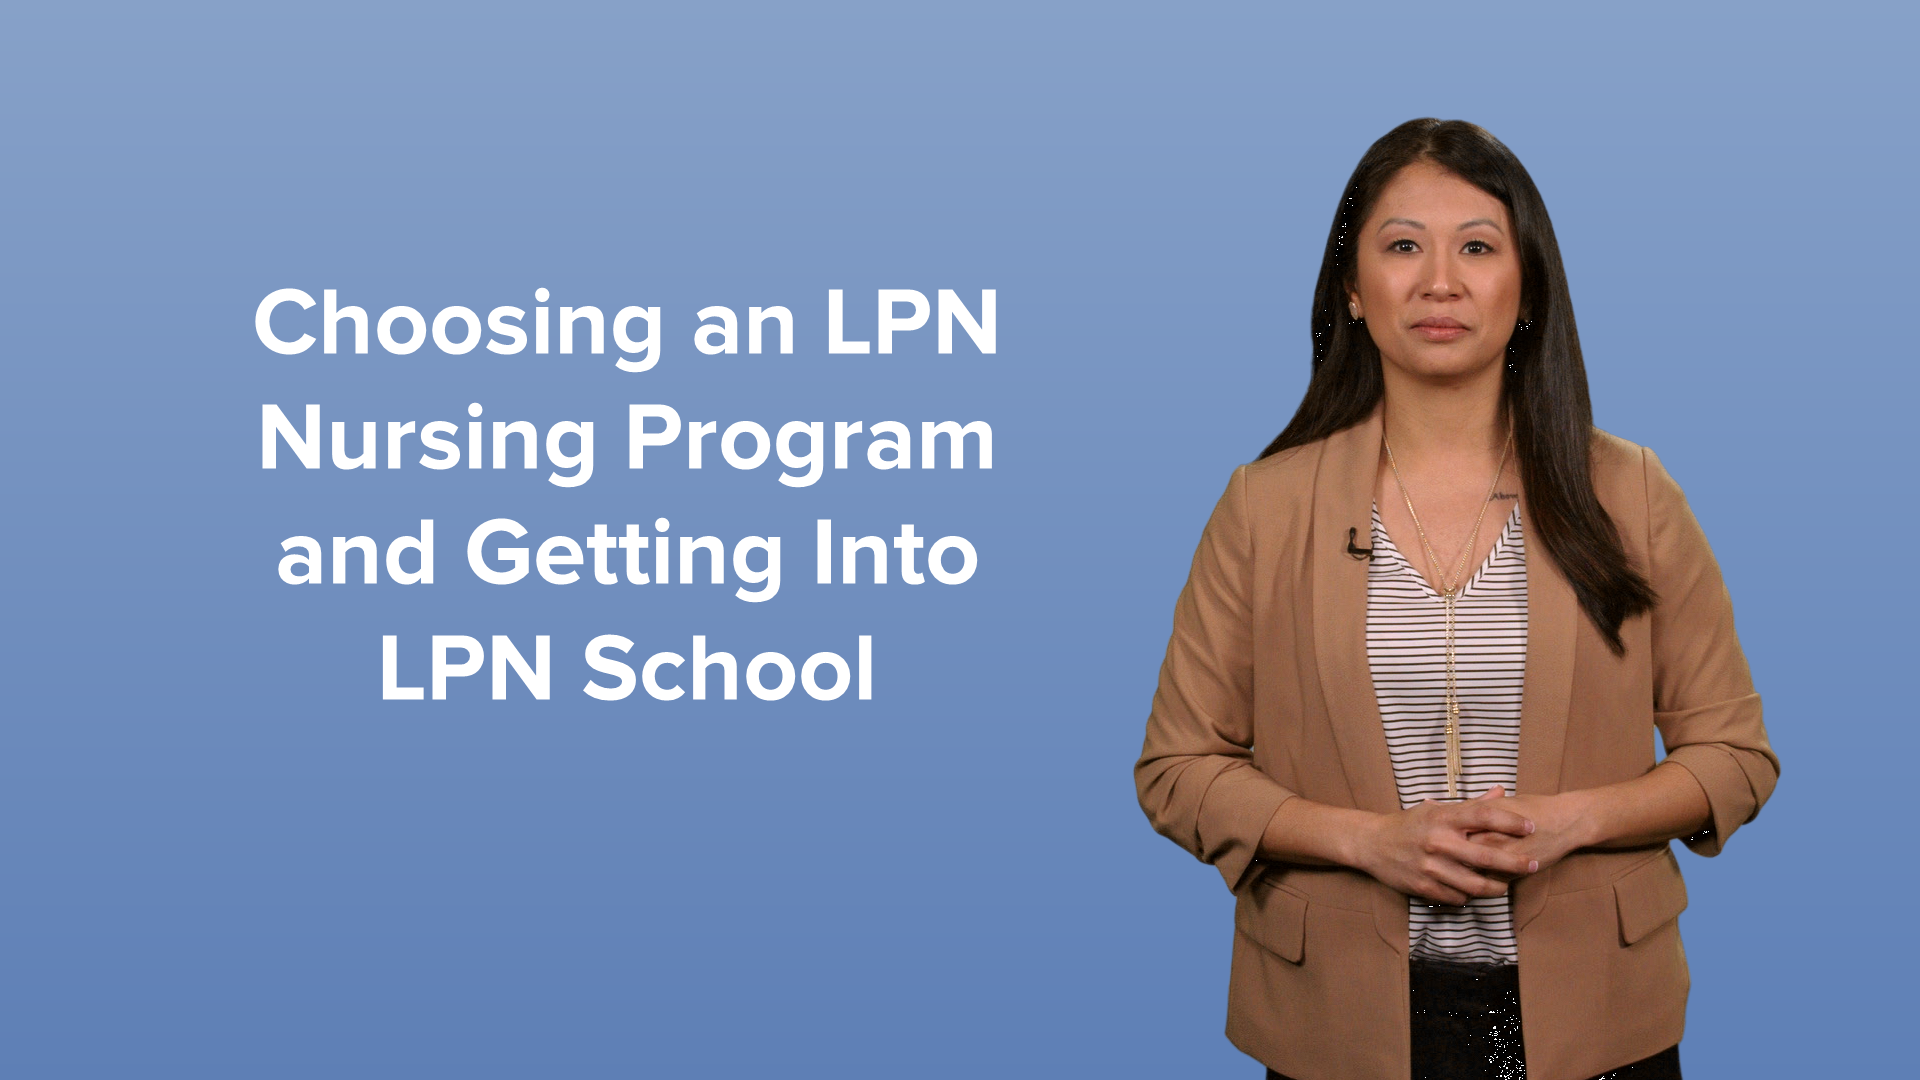 lpn program coursework